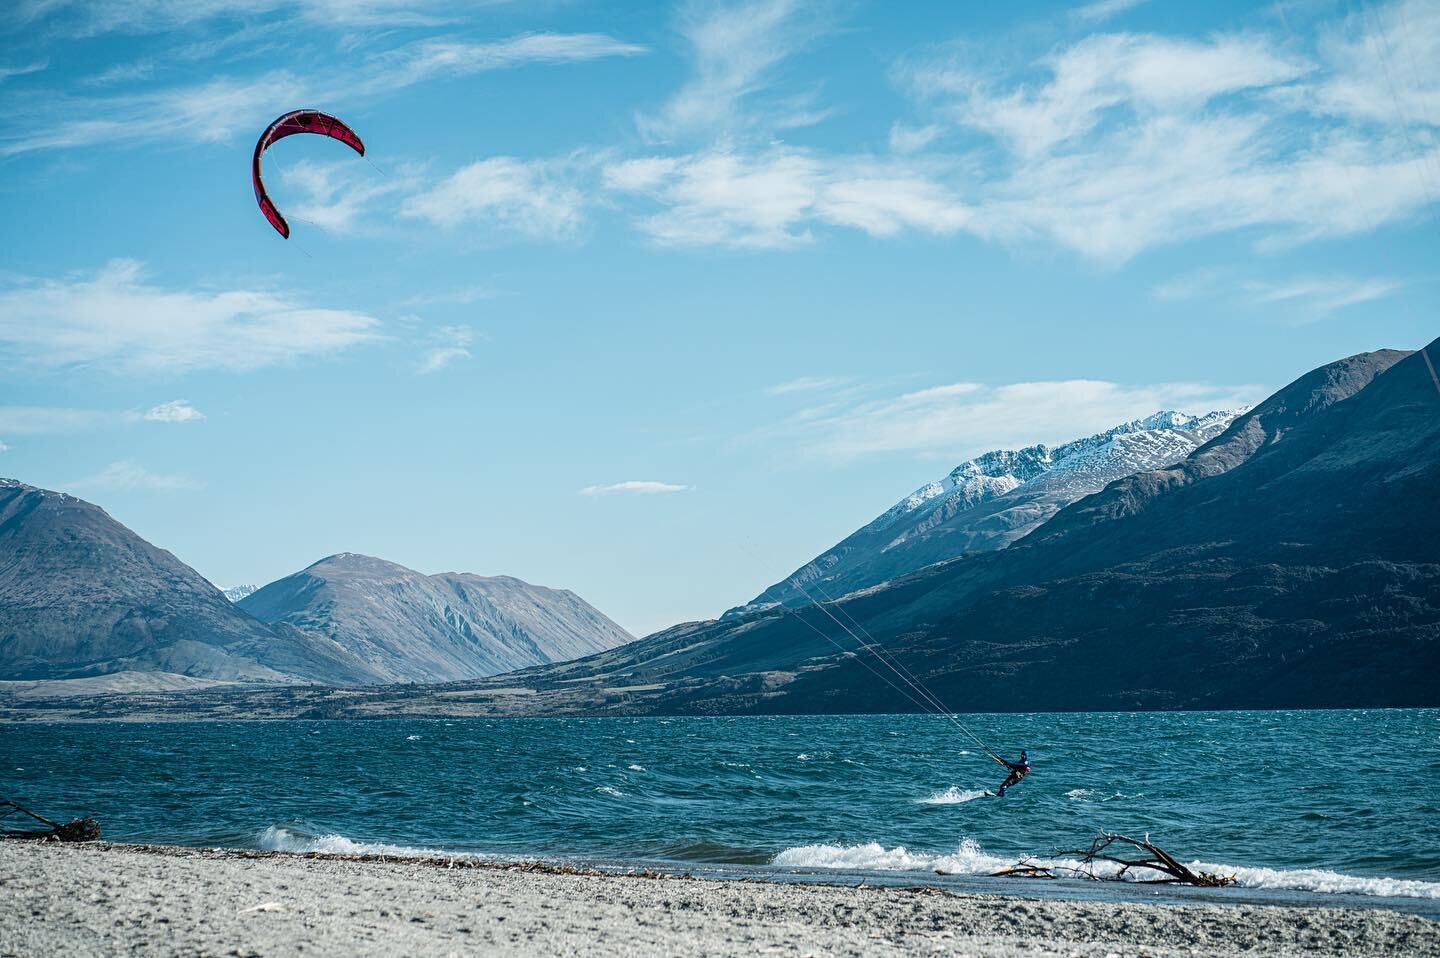 Some epic kite surfing on Lake Wakatipu.
.
.
.
.
.
.
#lakewakatipu #queenstown @queenstownnz @glenorchynz #glenorchy @purenewzealand #watersports #kitesurfing #wind #outdoors #thegreatoutdoors #newzealand #mountains #landscapephotography @landscape_p